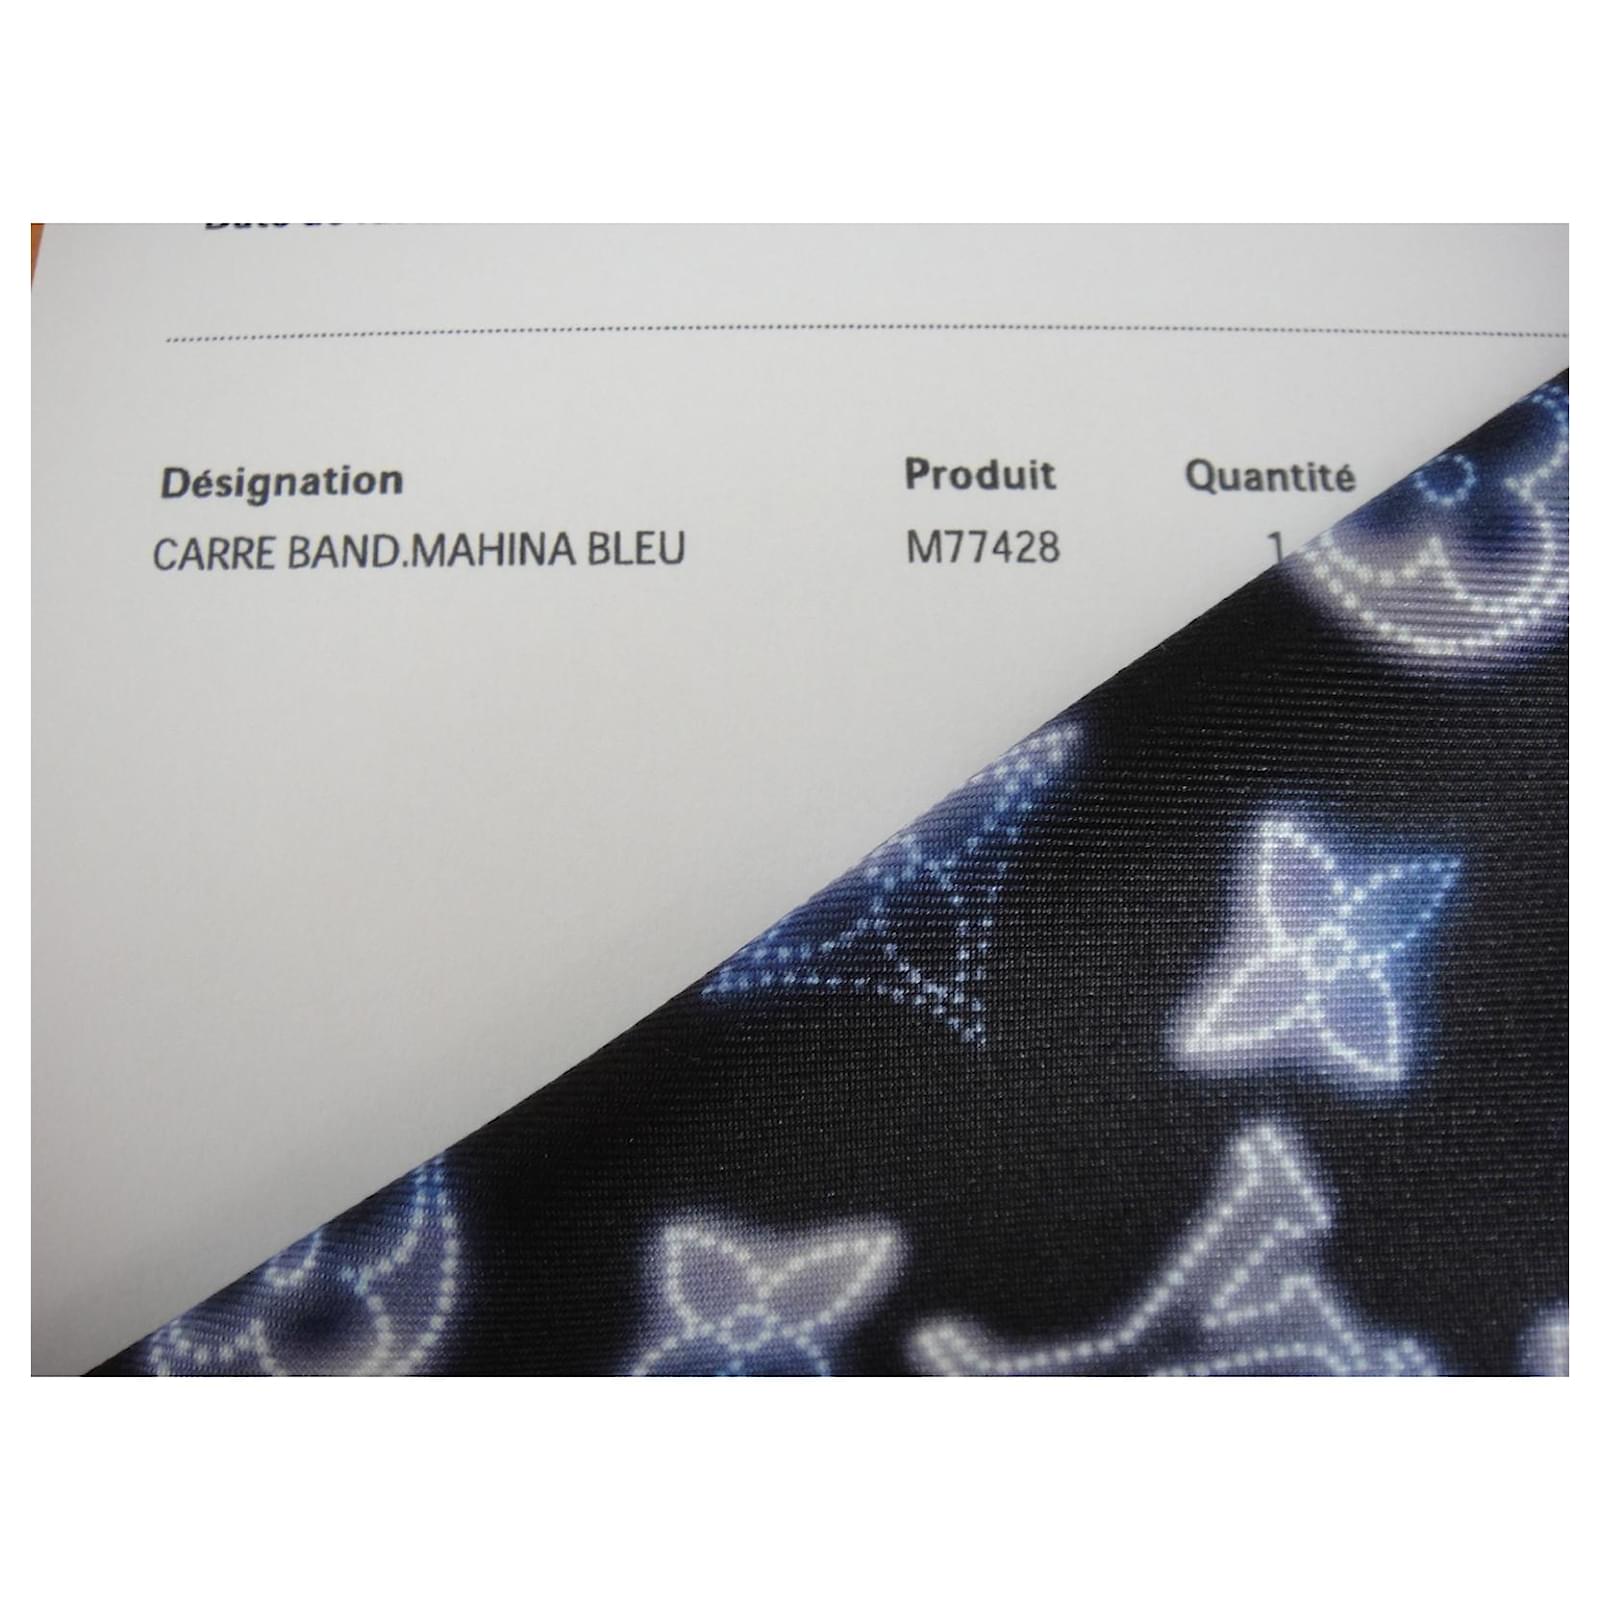 Louis Vuitton Flight Mode Bandana - CAPSULE Collection Blue Silk ref.442215  - Joli Closet